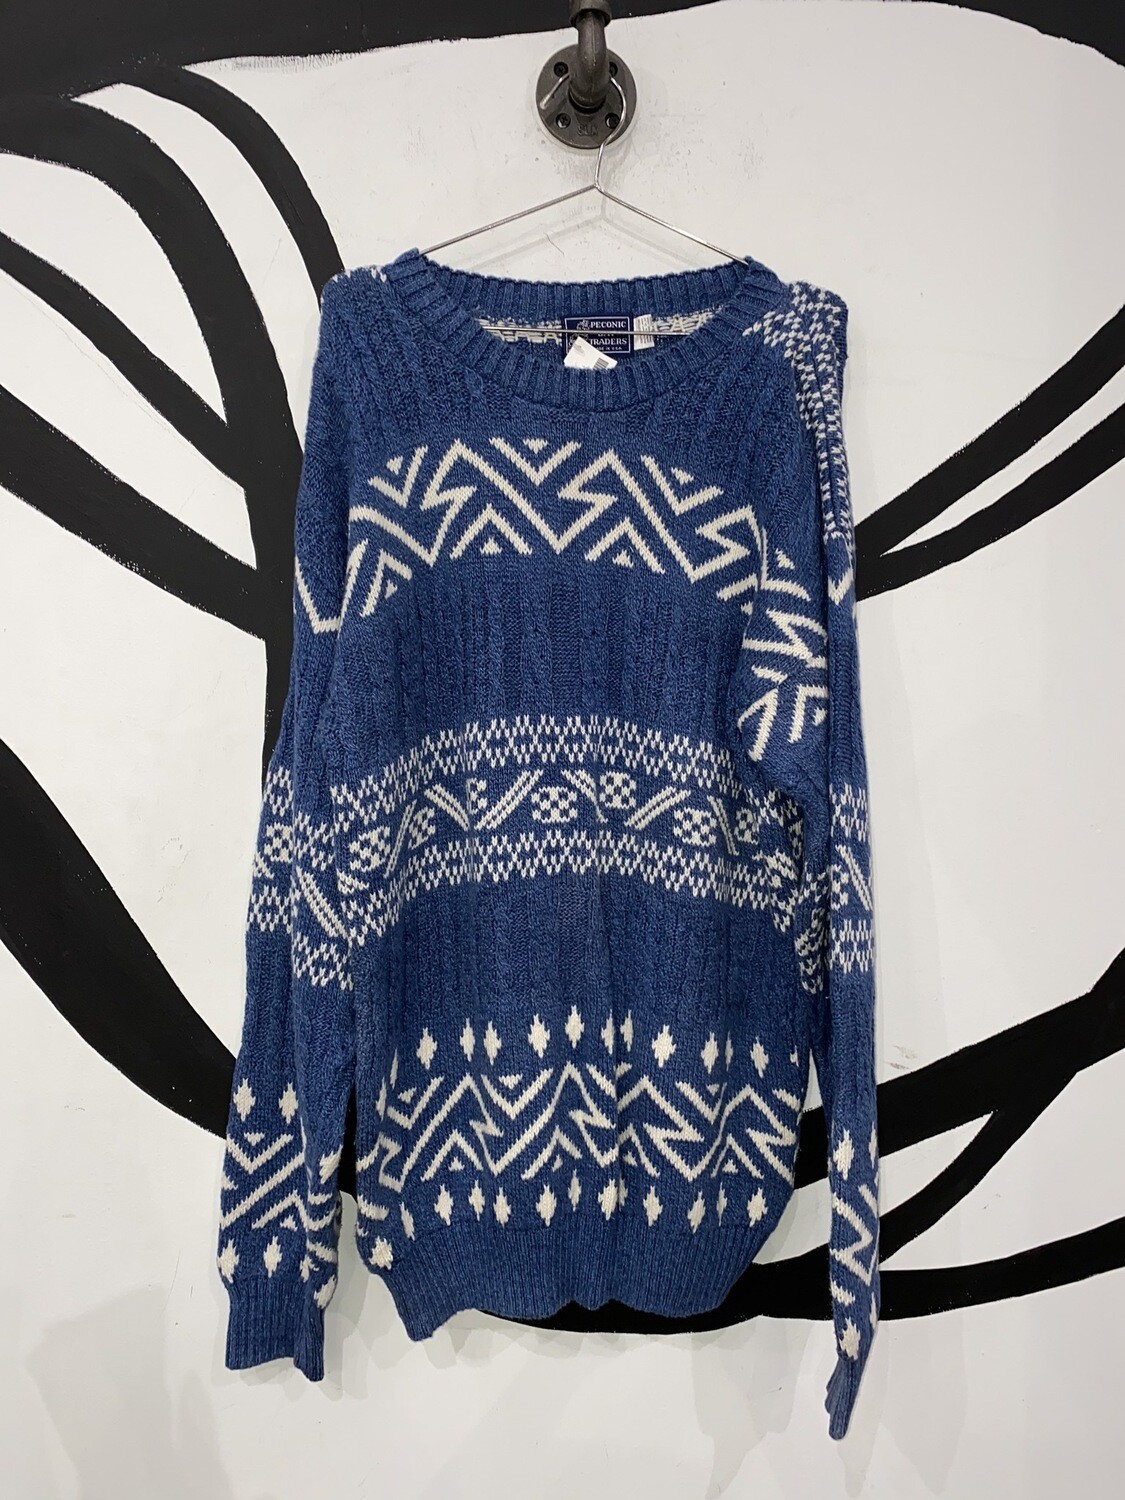 Peconic Bay Blue Knit Sweater Size L